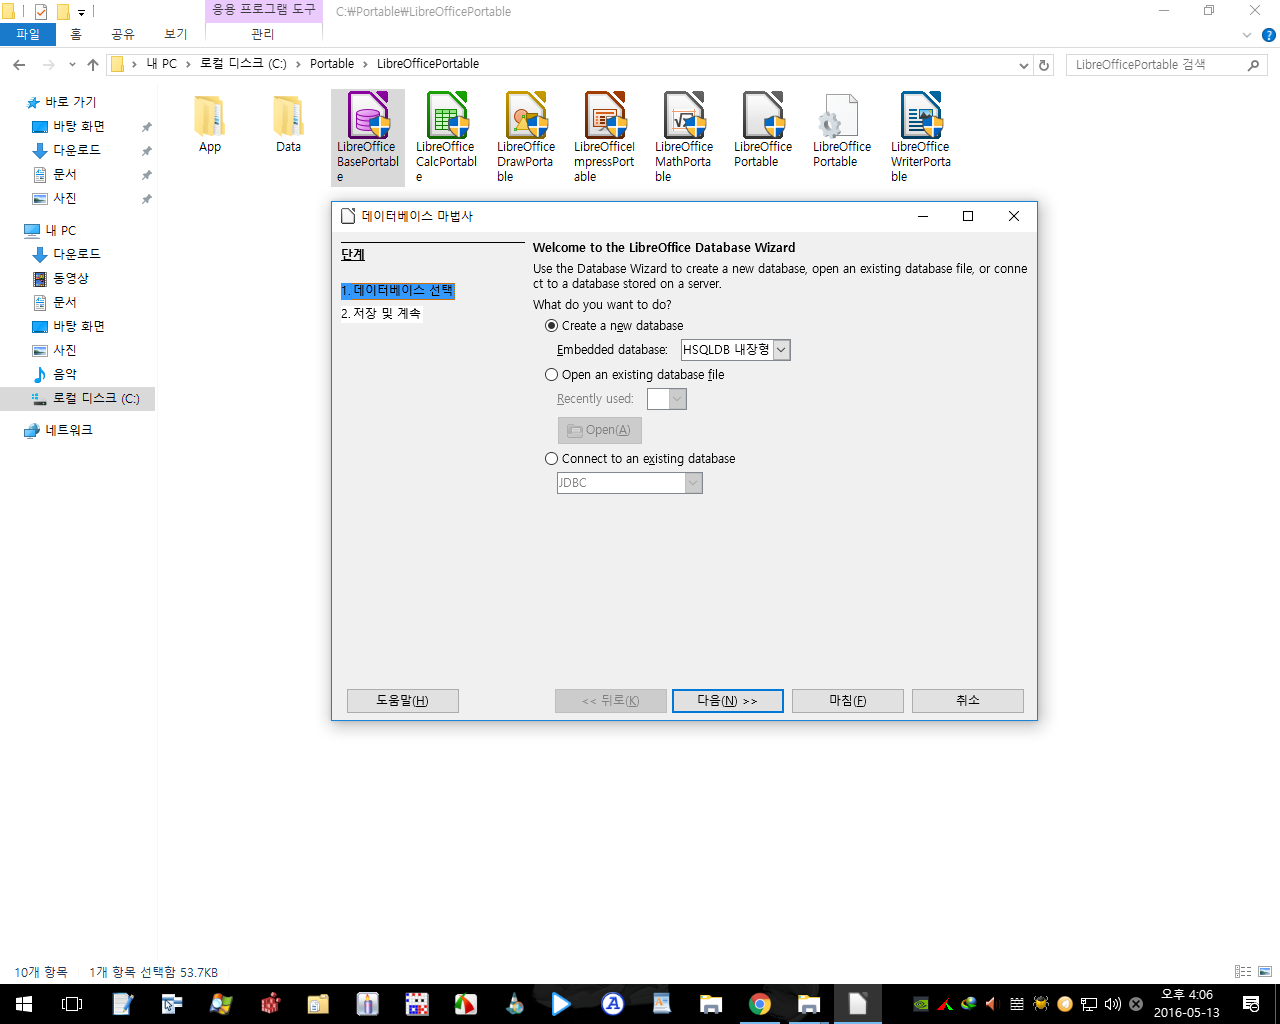 LibreOfficeBasePortable.png